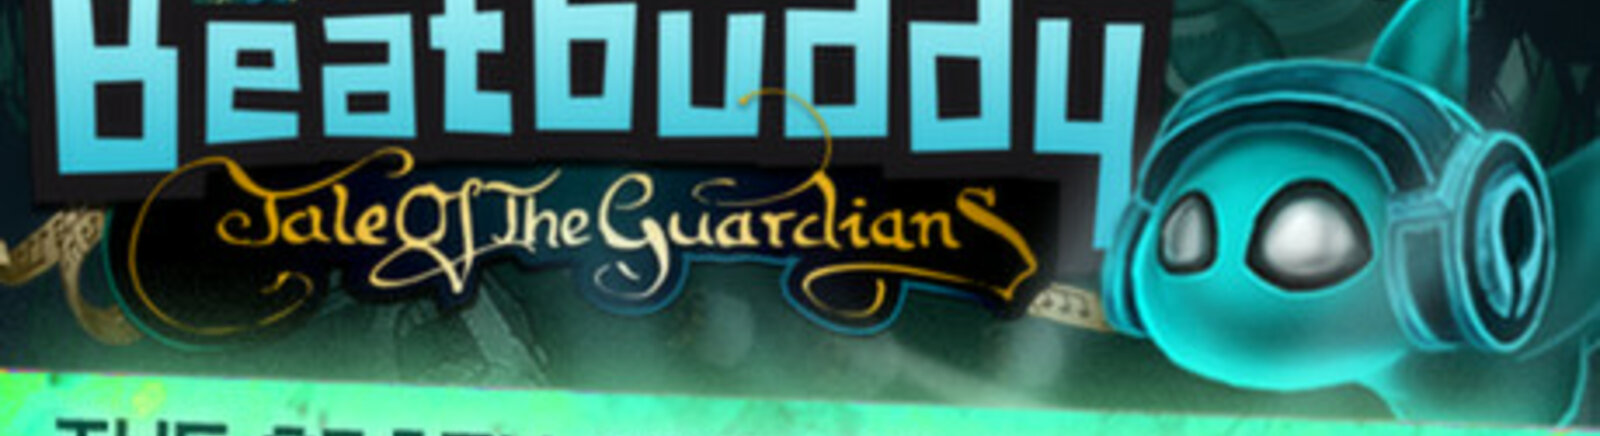 Дата выхода Beatbuddy: Tale of the Guardians  на PC, Xbox One и iOS в России и во всем мире